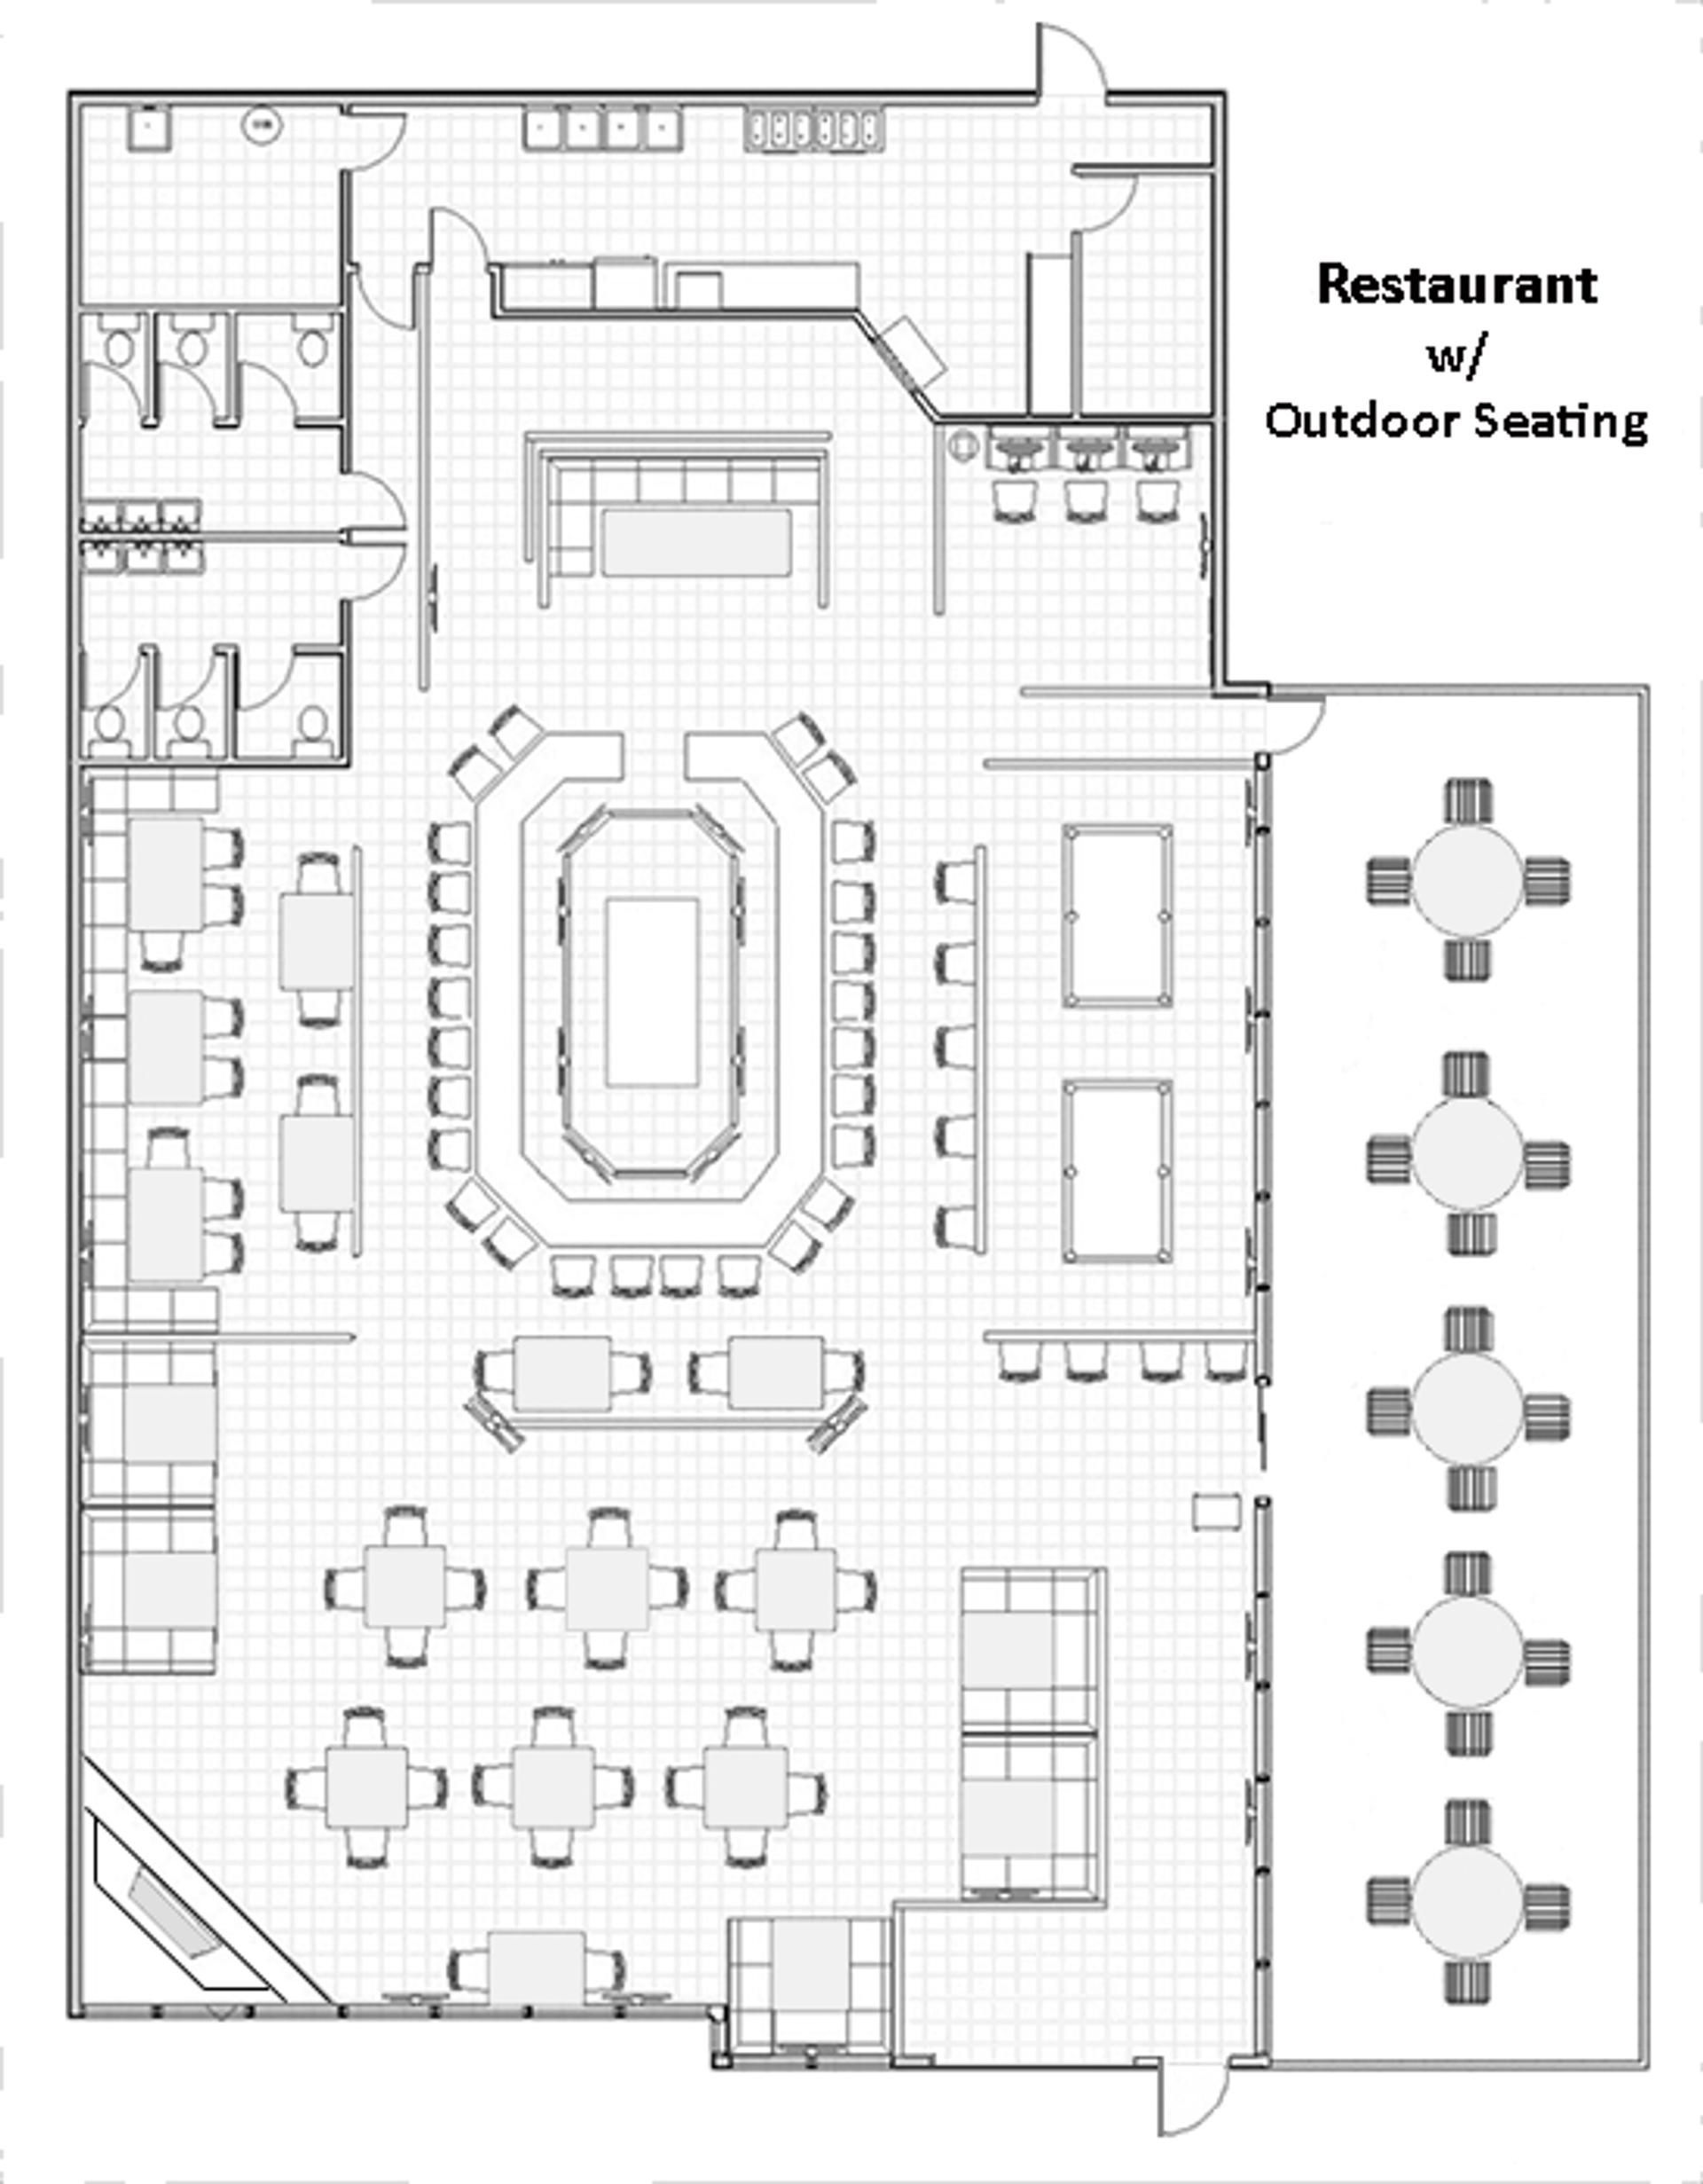 Floor plan of a restaurant's dining area